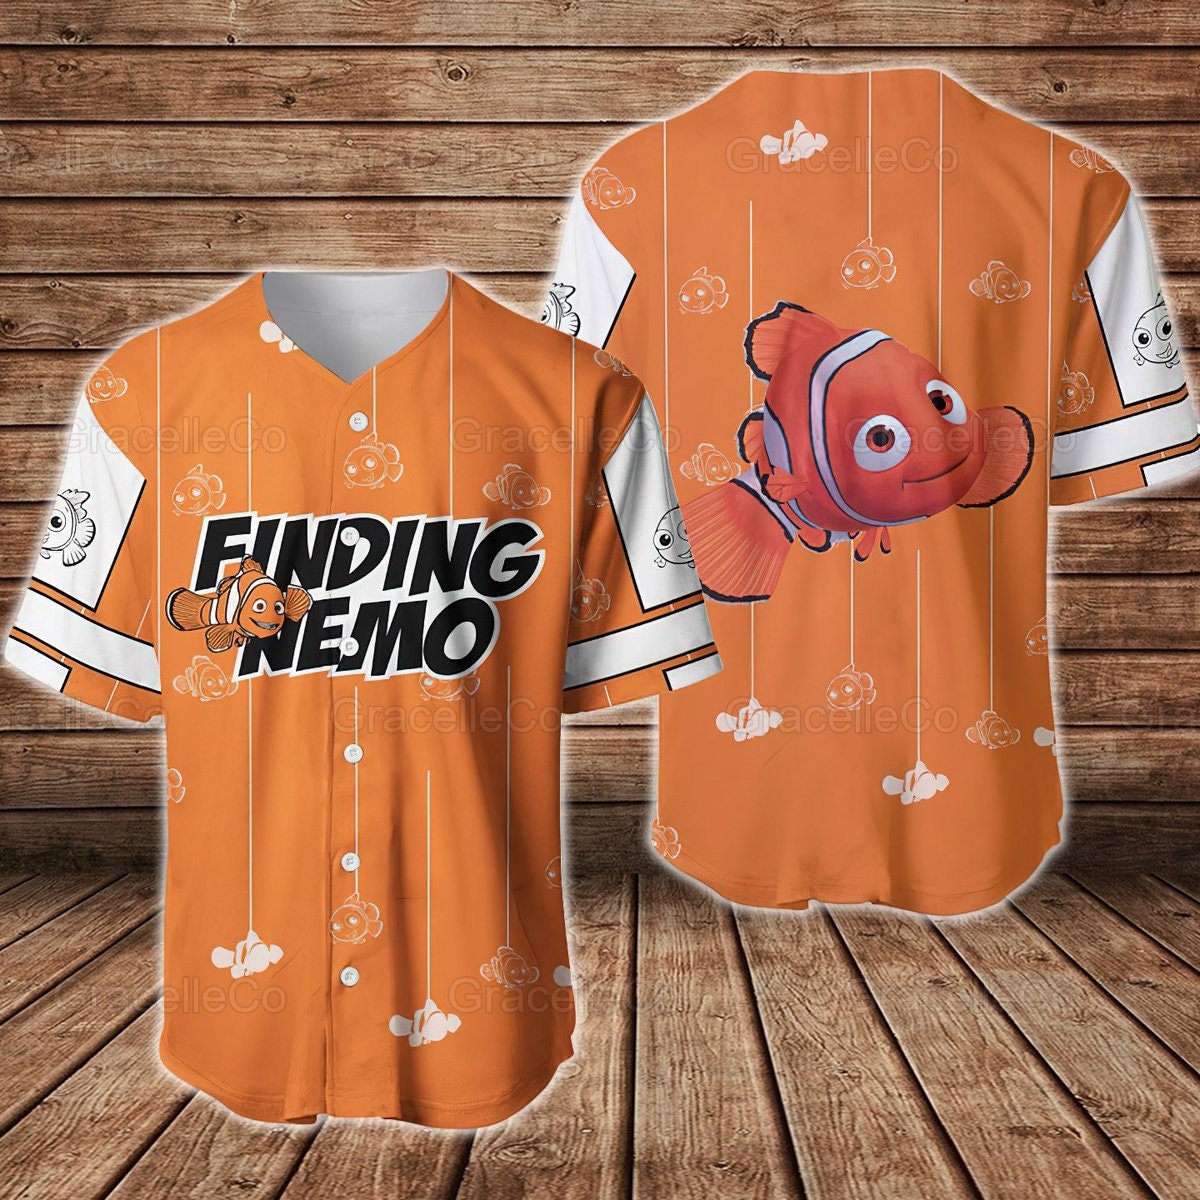 https://images.leecyprint.com/wp-content/uploads/2023/06/Finding-Nemo-Baseball-Jersey-Shirt-Nemo-Fish-Shirts-Disney-Nemo-Jersey-Shirts-Nemo-Fish-Movie-Shirt-Disney-Baseball-Jersey-1.jpg